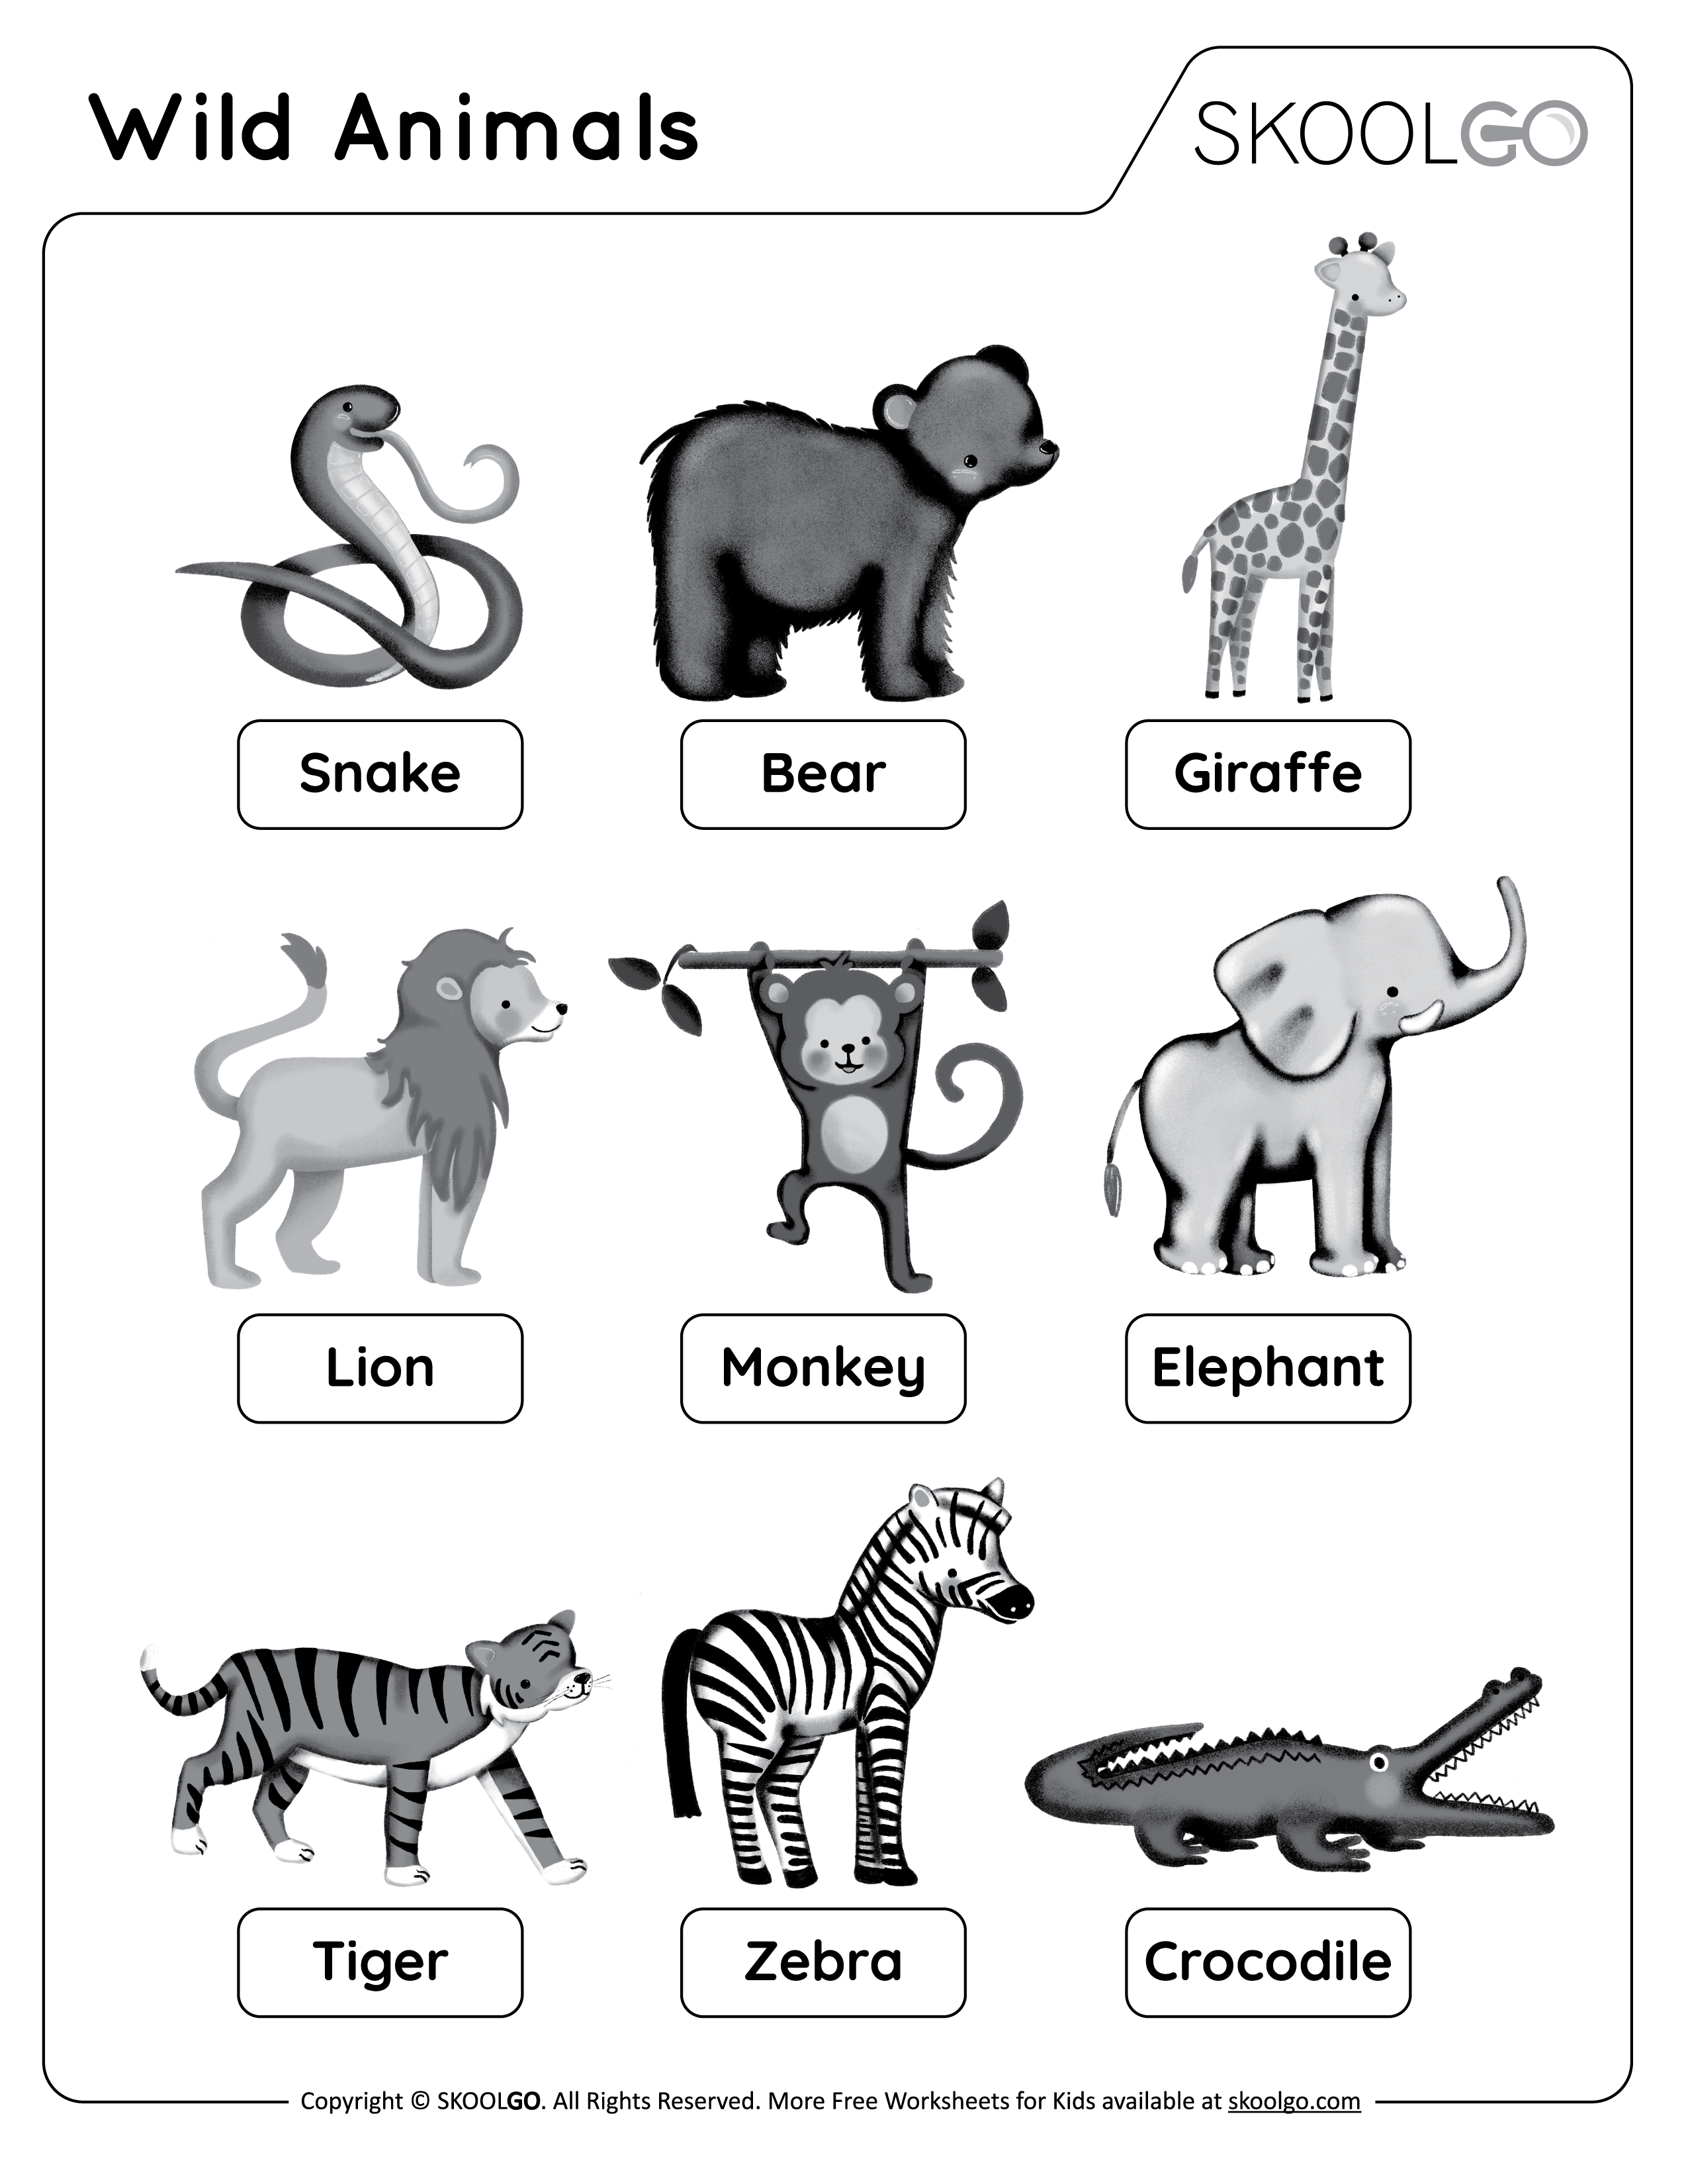 Wild Animals - Free Black and White Worksheet for Kids